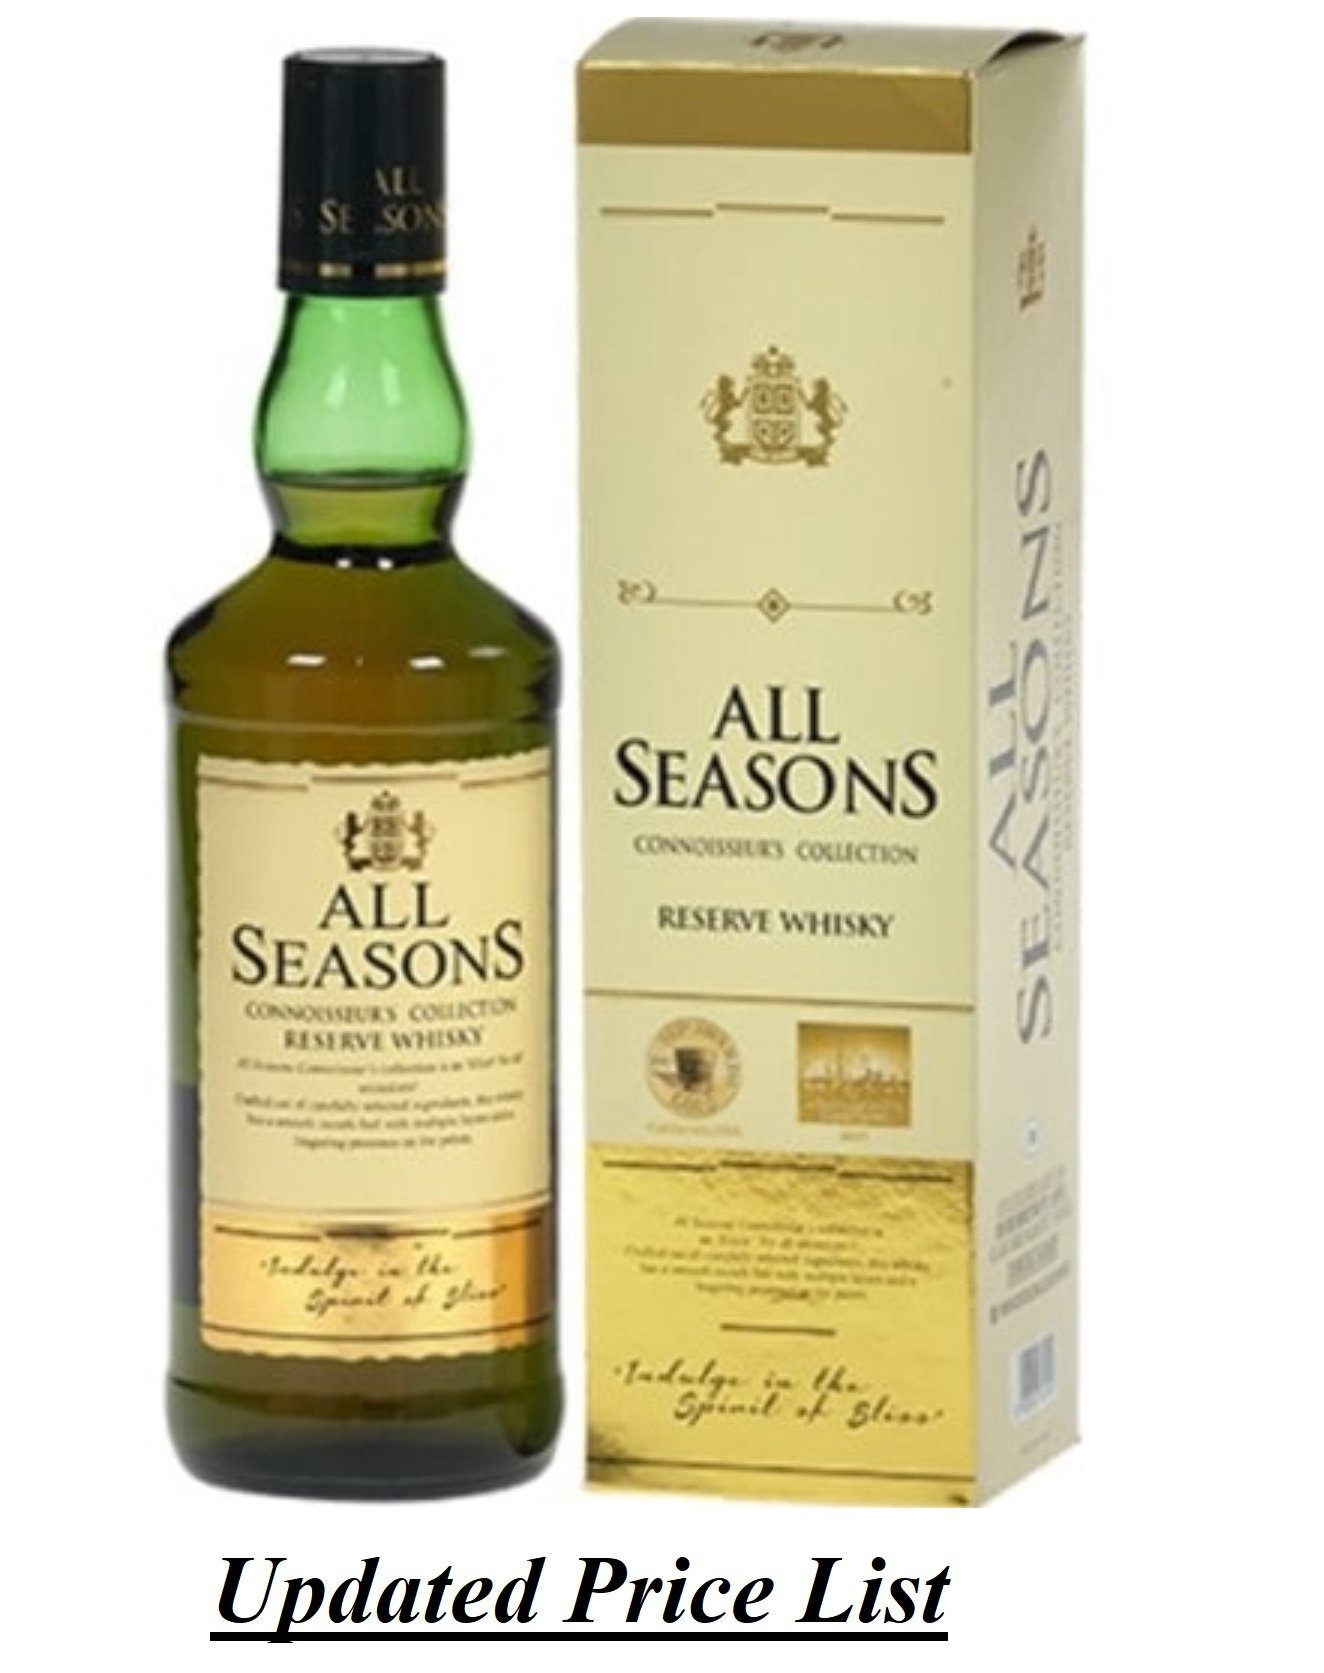 All Seasons Whisky Price